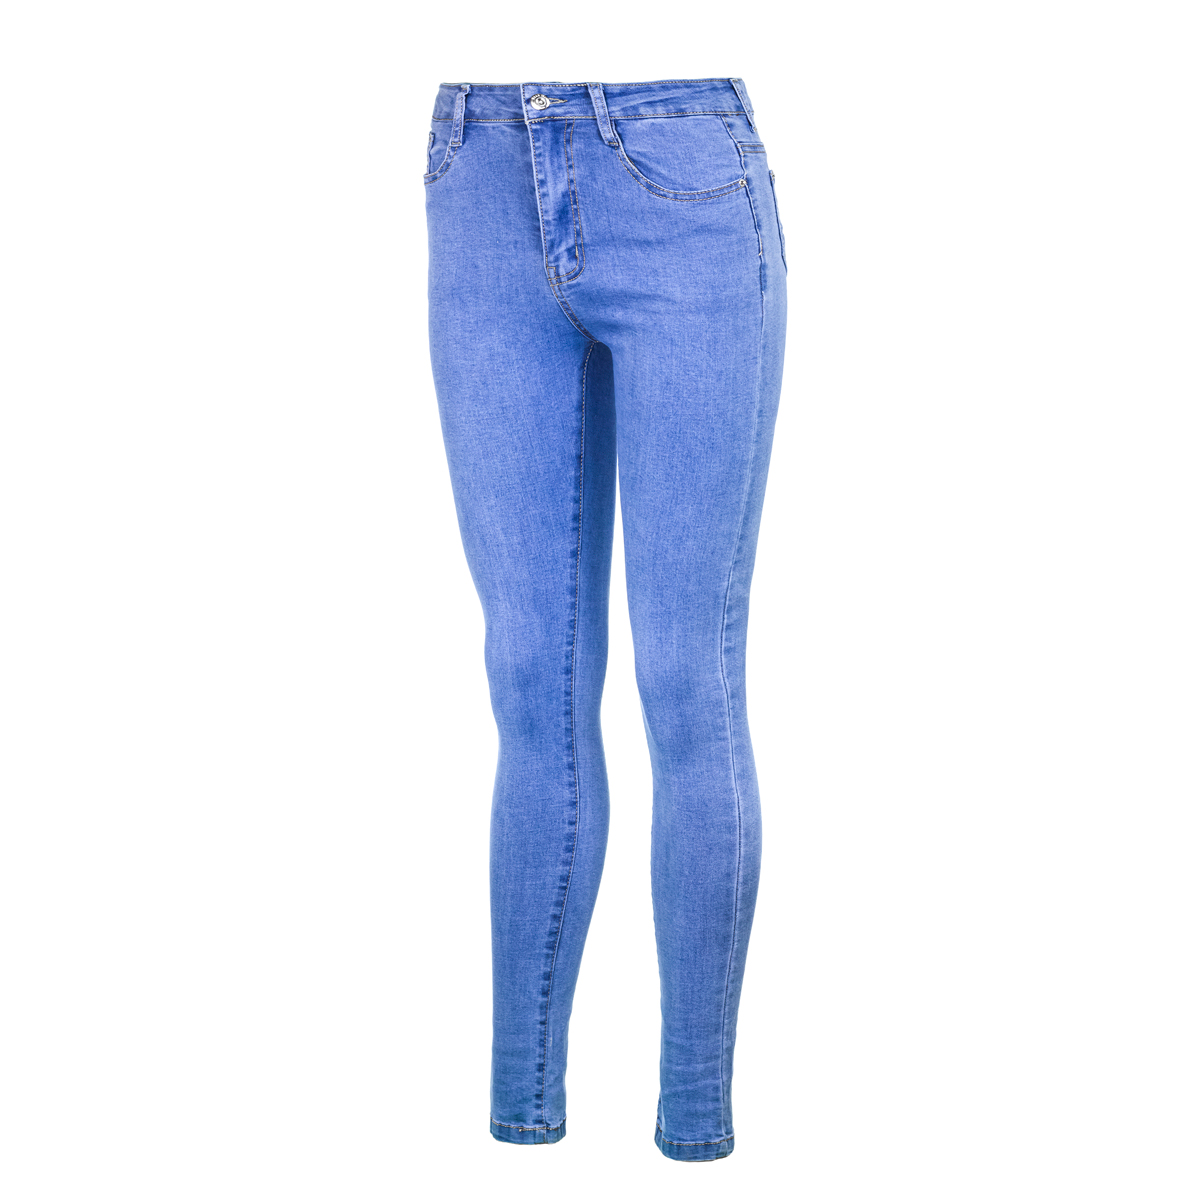 Жен. джинсы арт. 12-0155 Голубой р. 26 Китай, размер 26 - фото 2